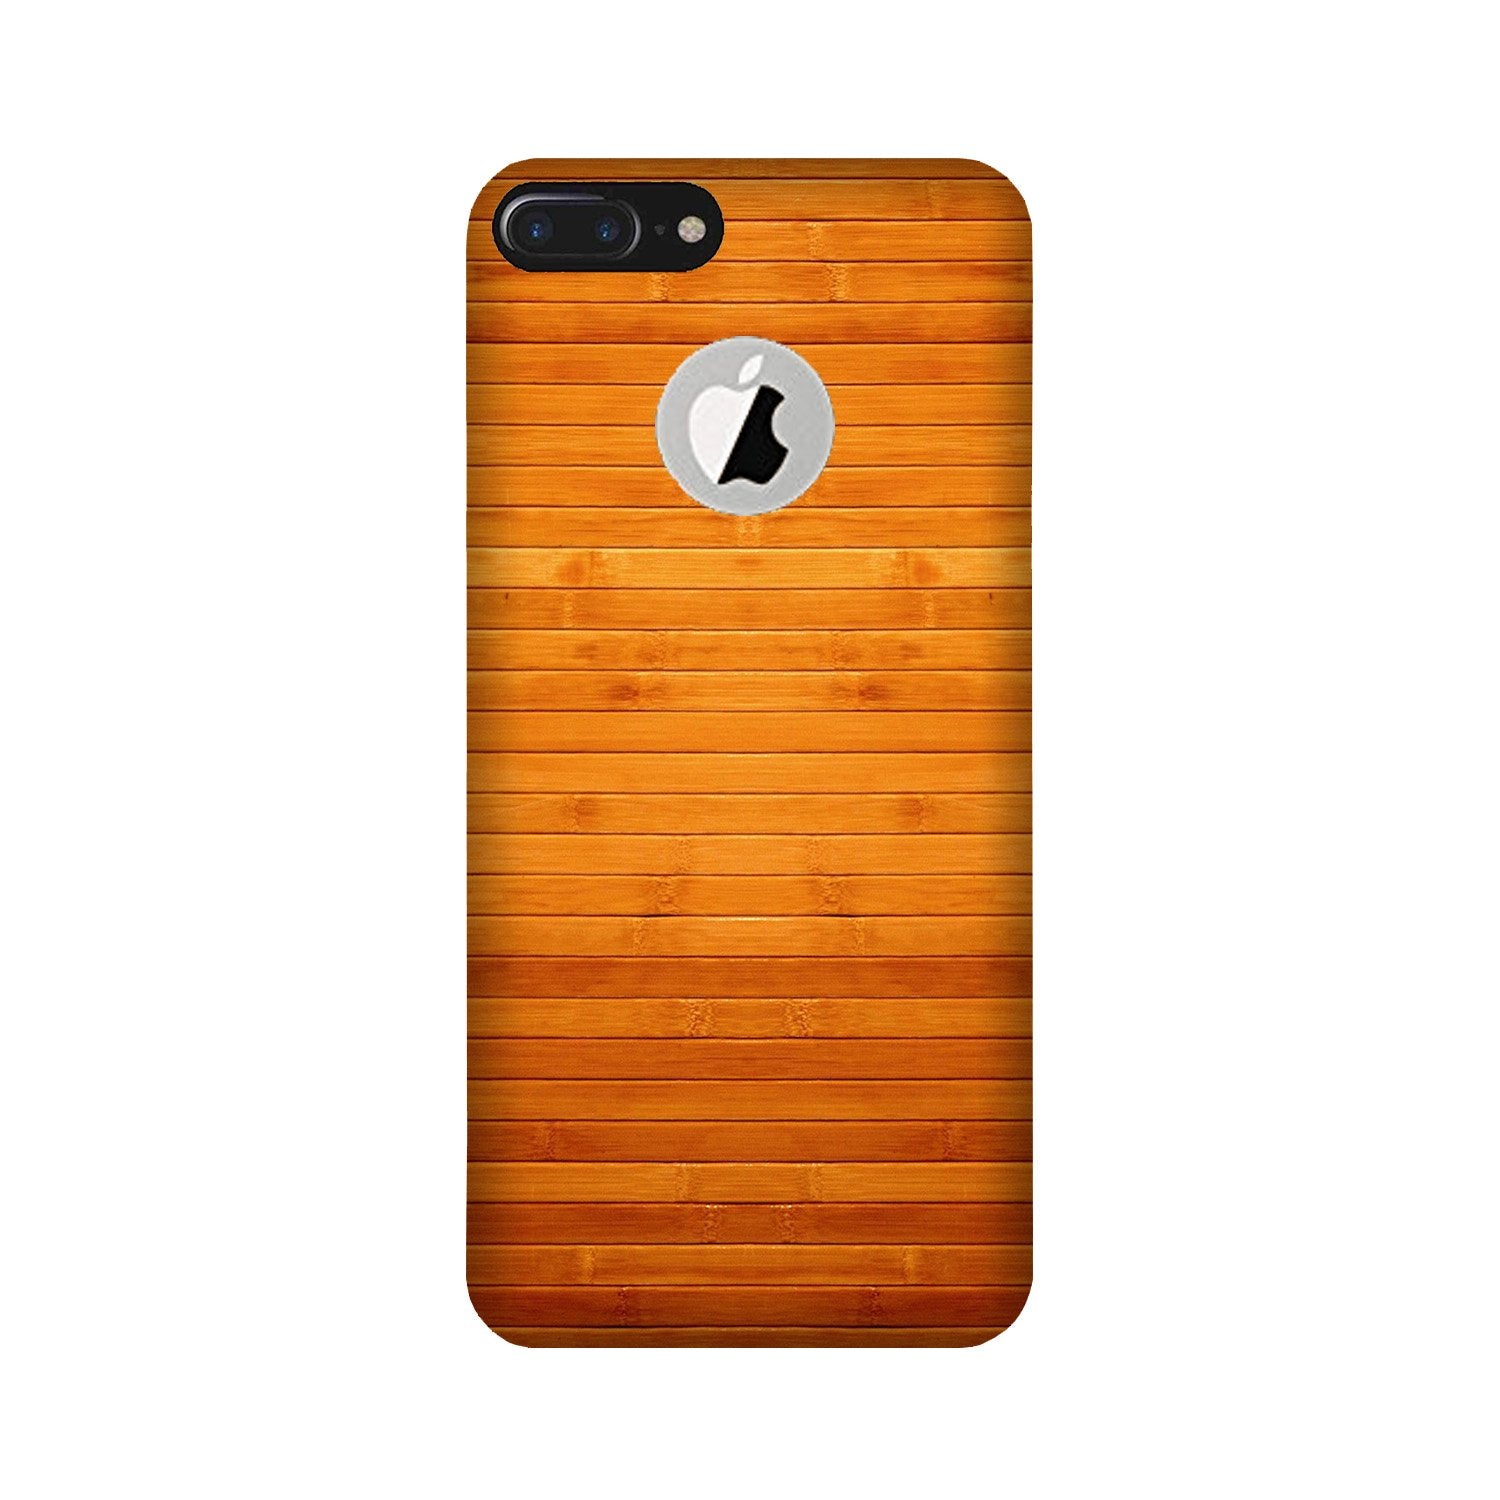 Wooden Look Case for iPhone 7 Plus logo cut(Design - 111)